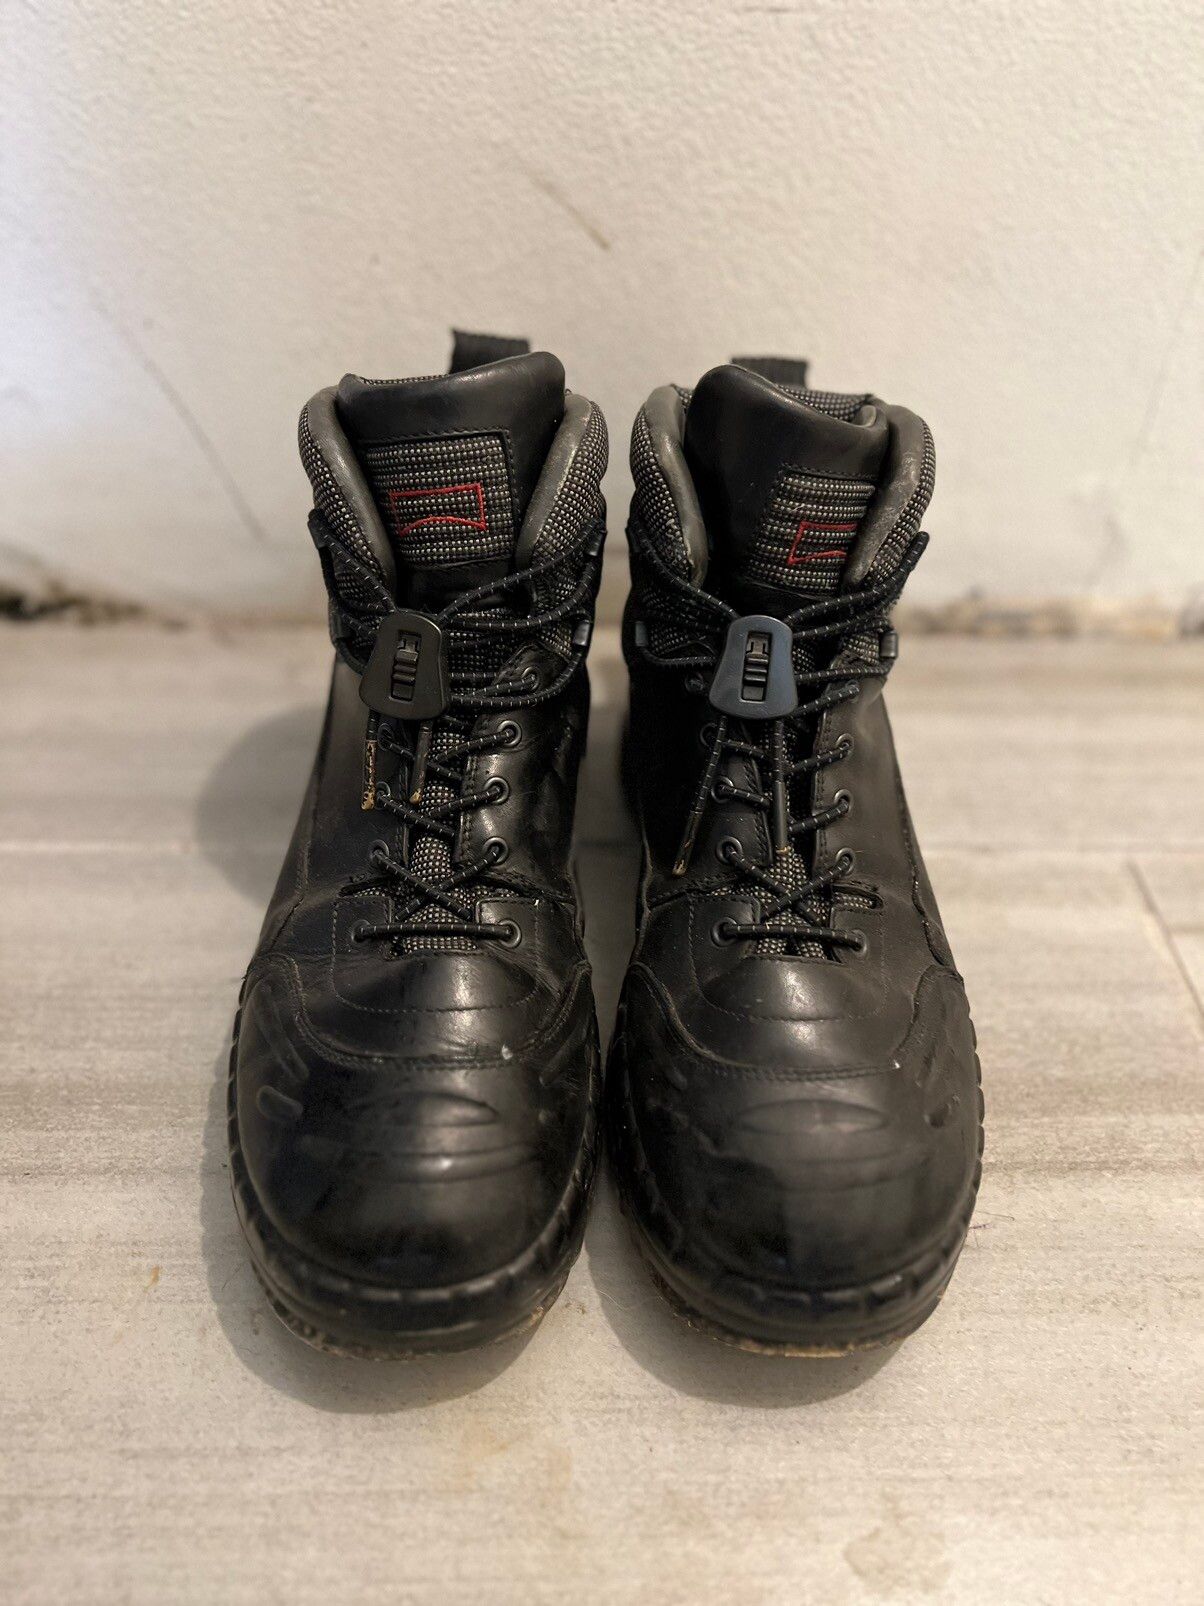 Camper Gore-tex boots | Grailed